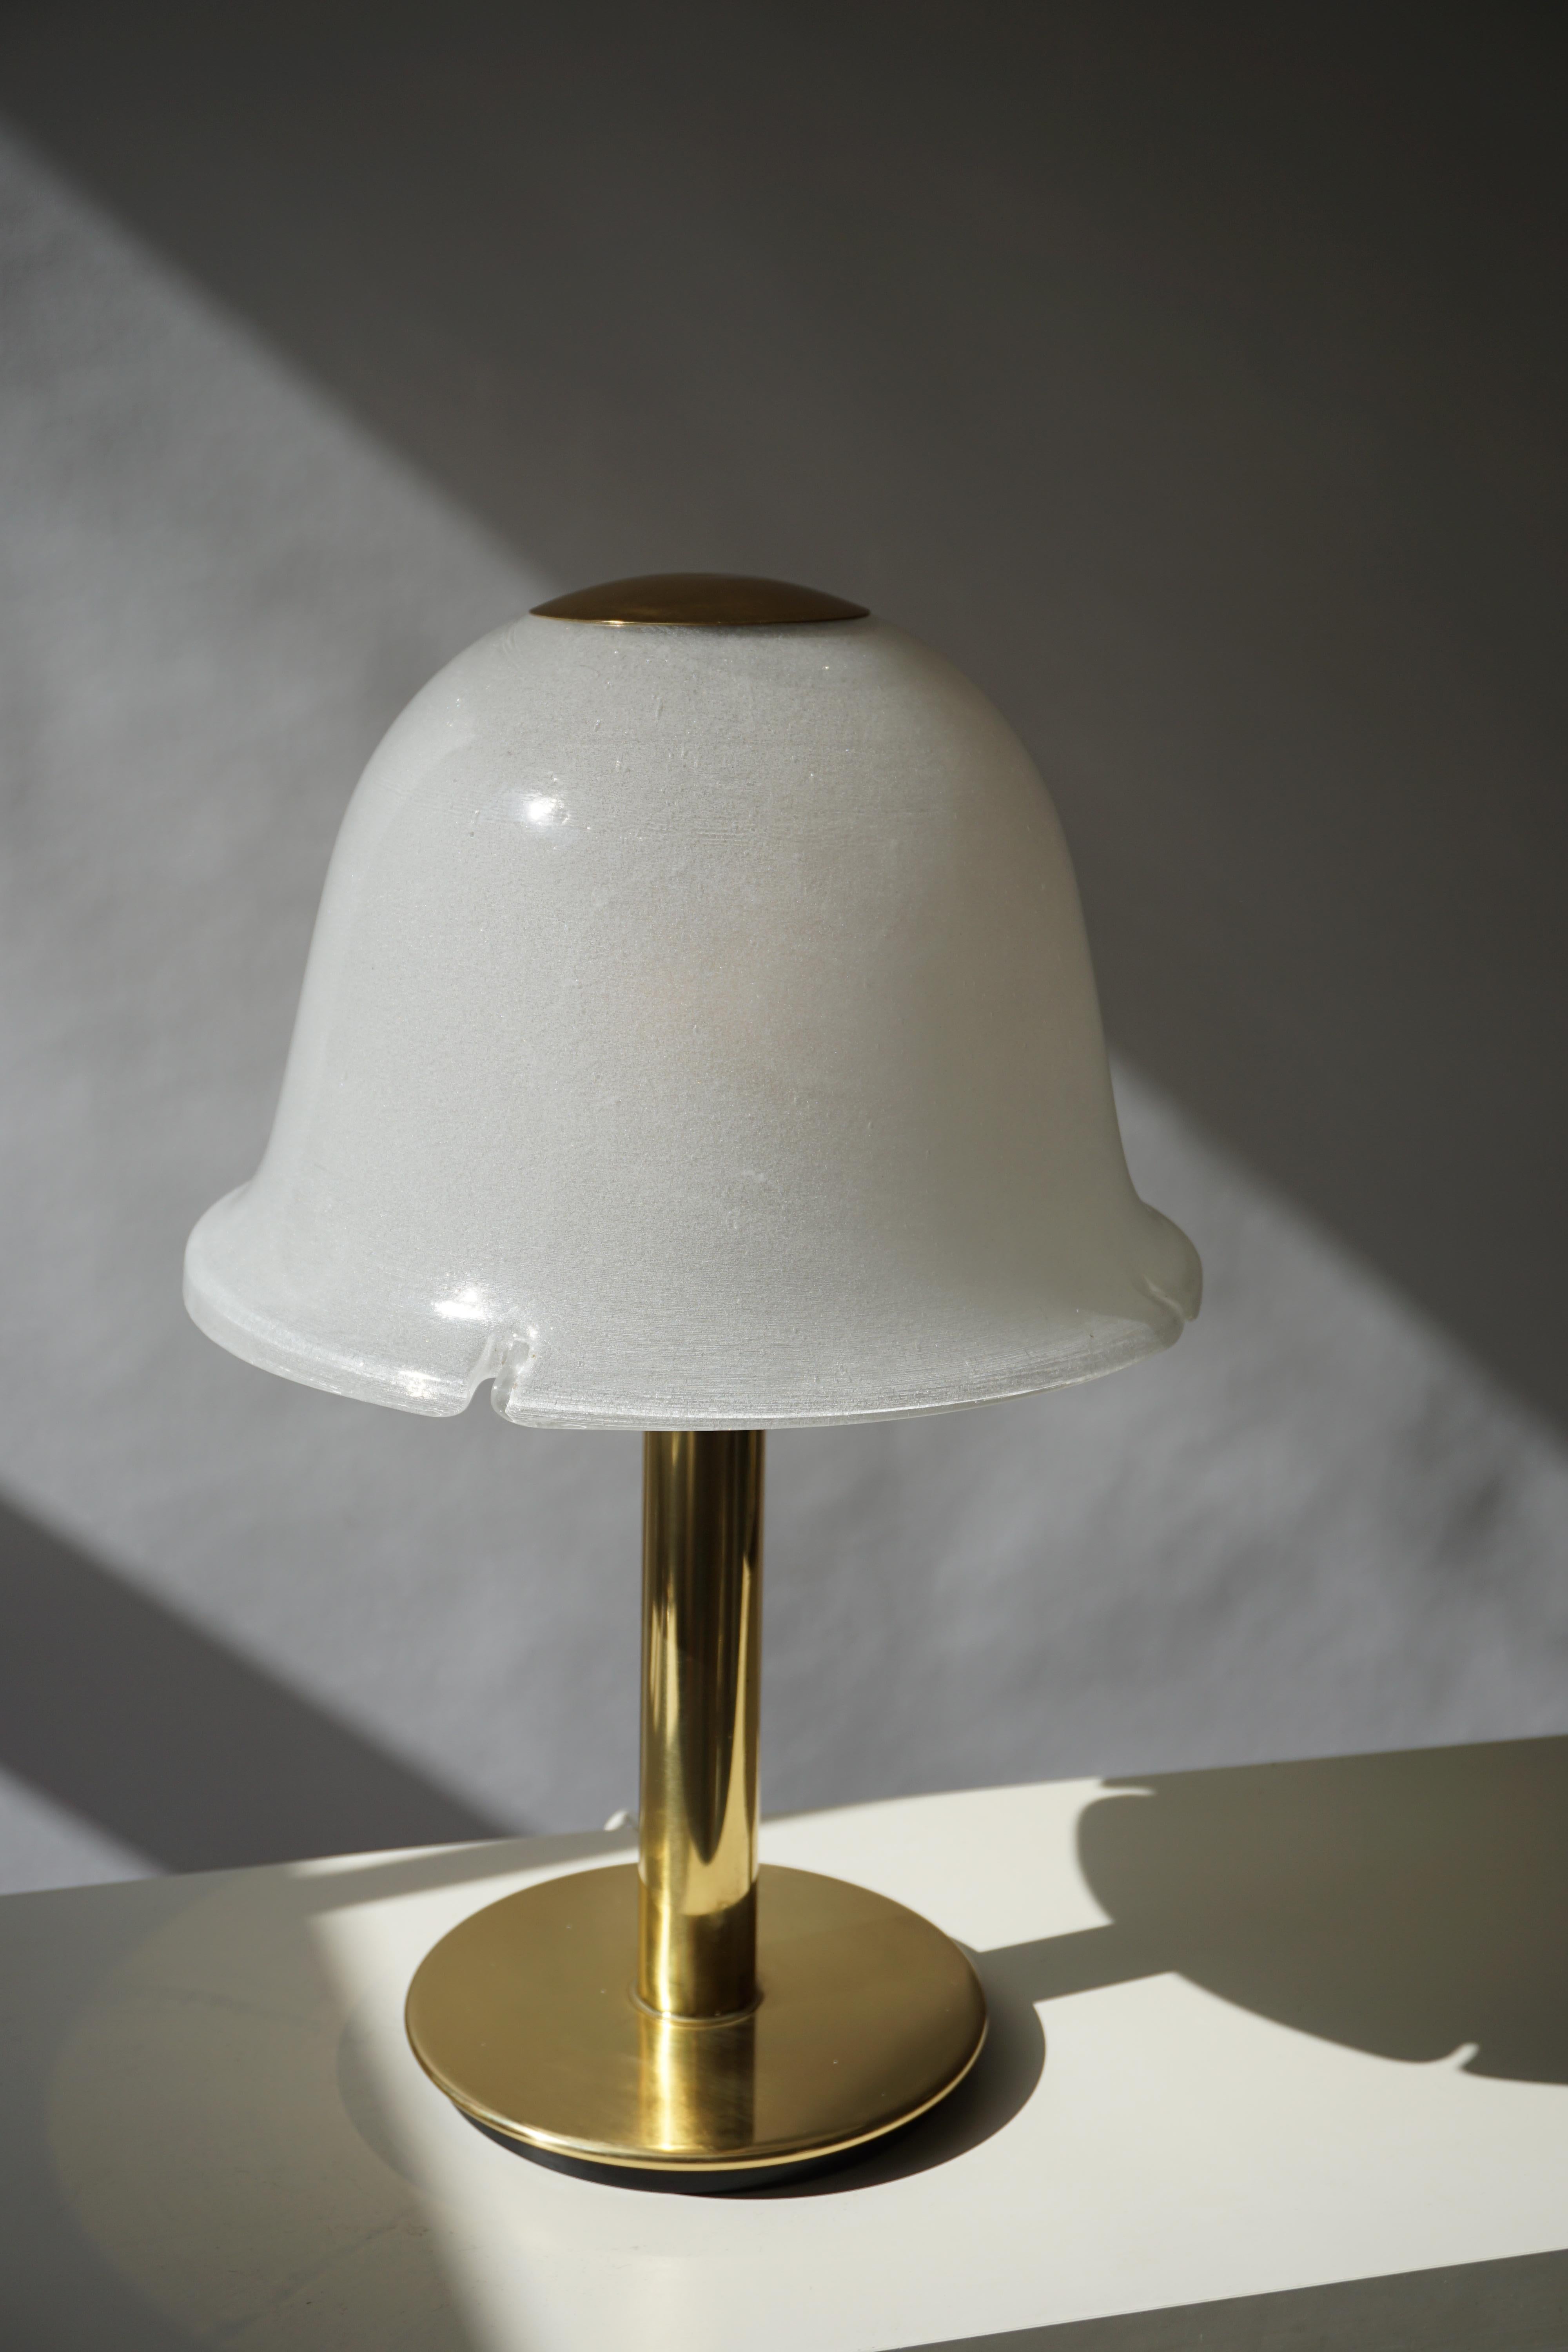 Italian Murano glass and brass table lamp.
Measures: Diameter 36 cm.
Height 56 cm.
One E27 bulb.